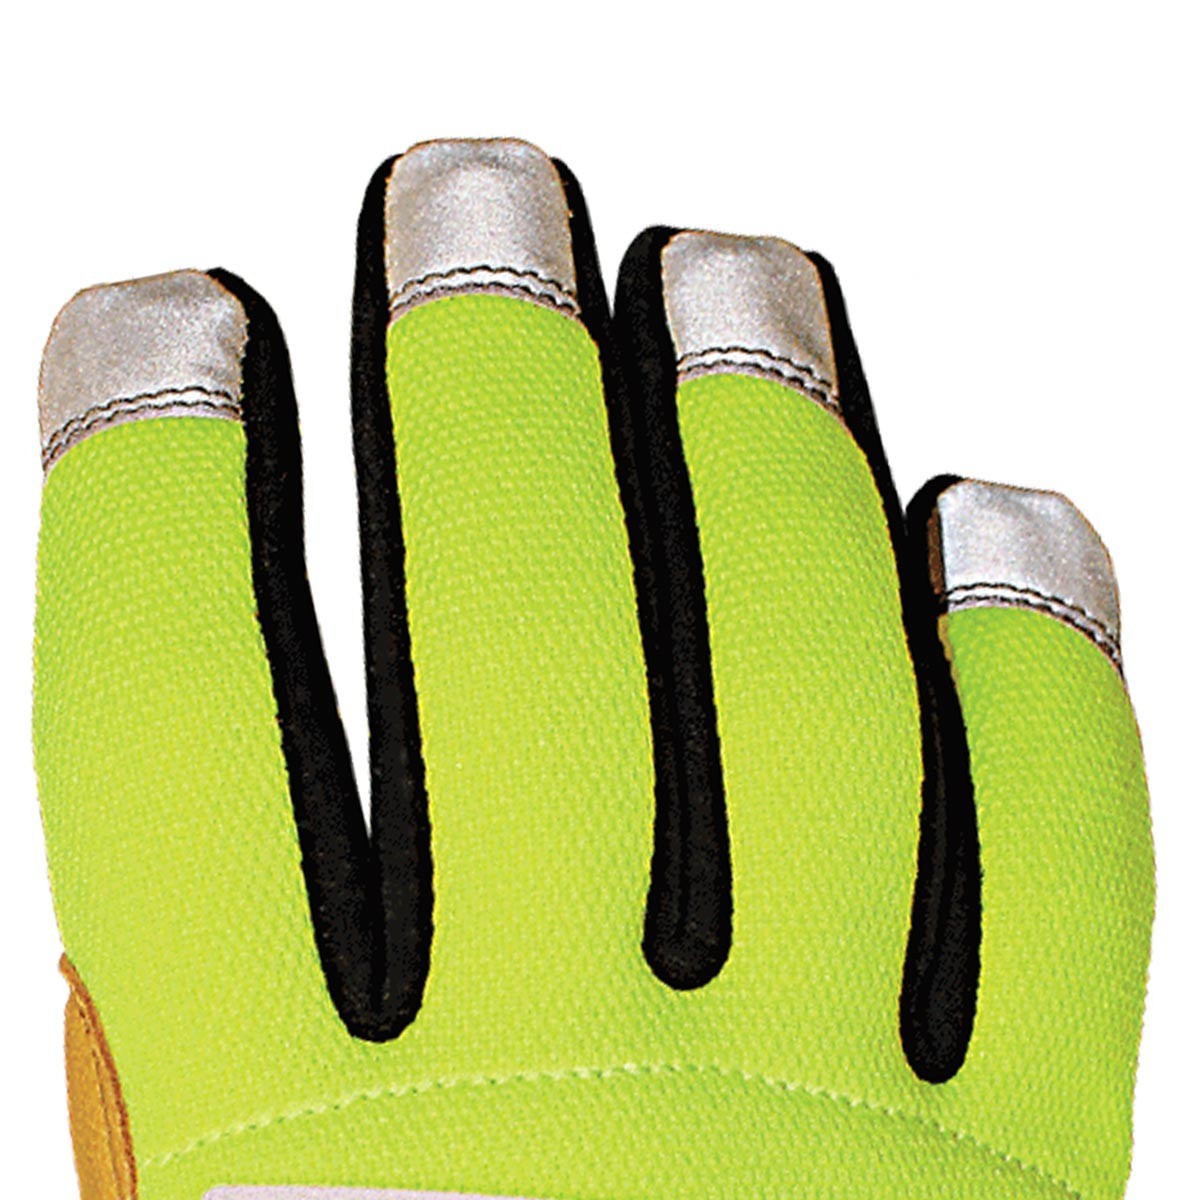 Safety Lime Hybrid Plus Gloves - Extra Large